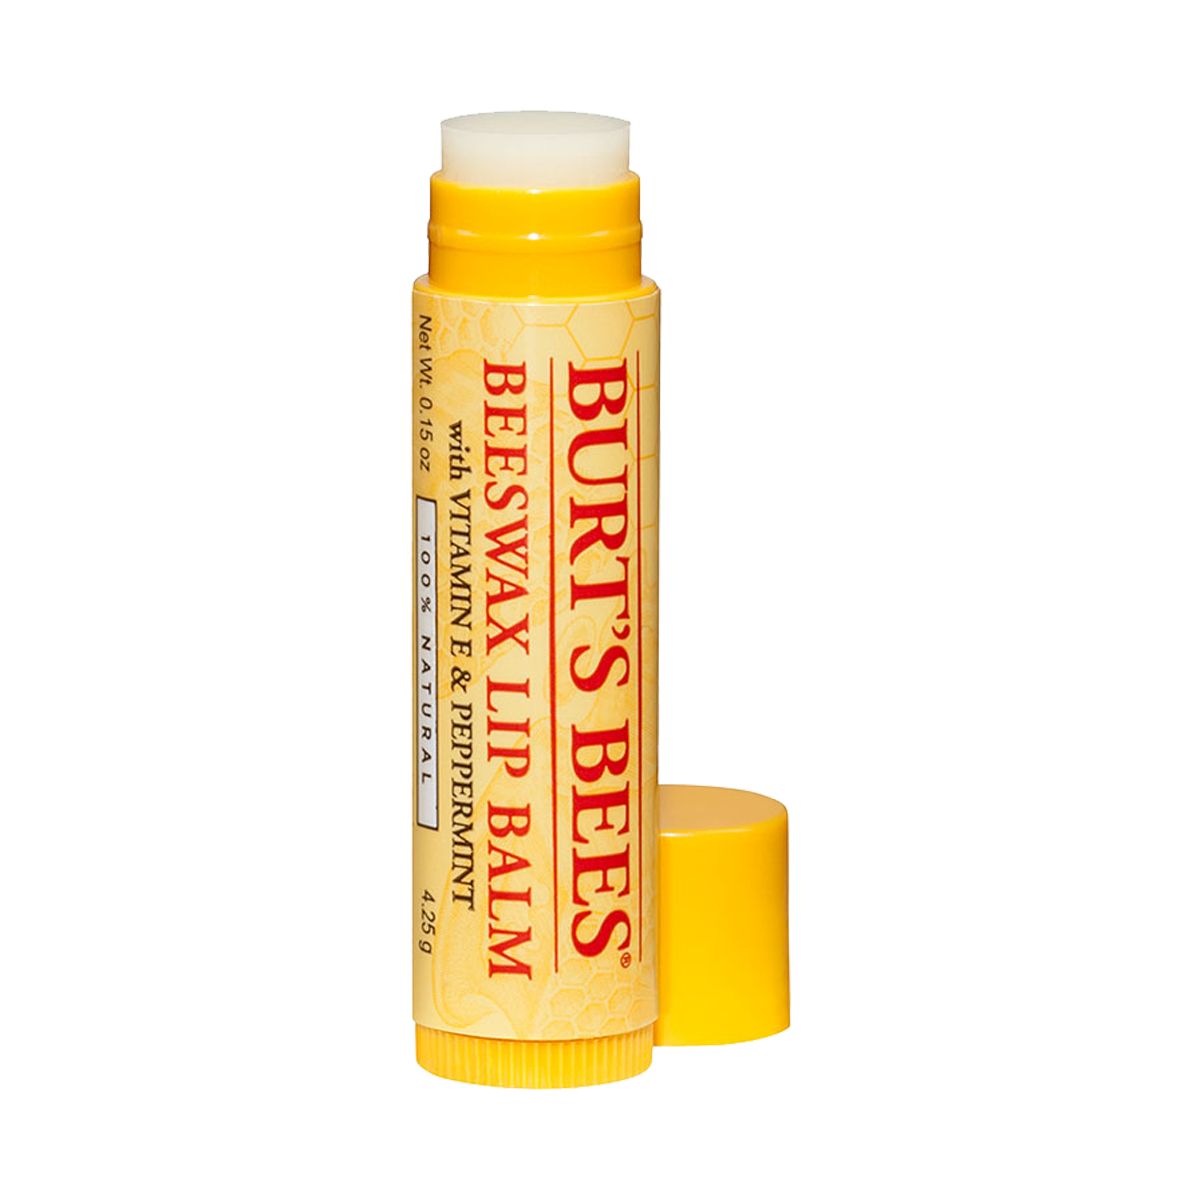 Burt’s Bees Beeswax 100% Natural Moisturizing Lip Balm - 1 Tube